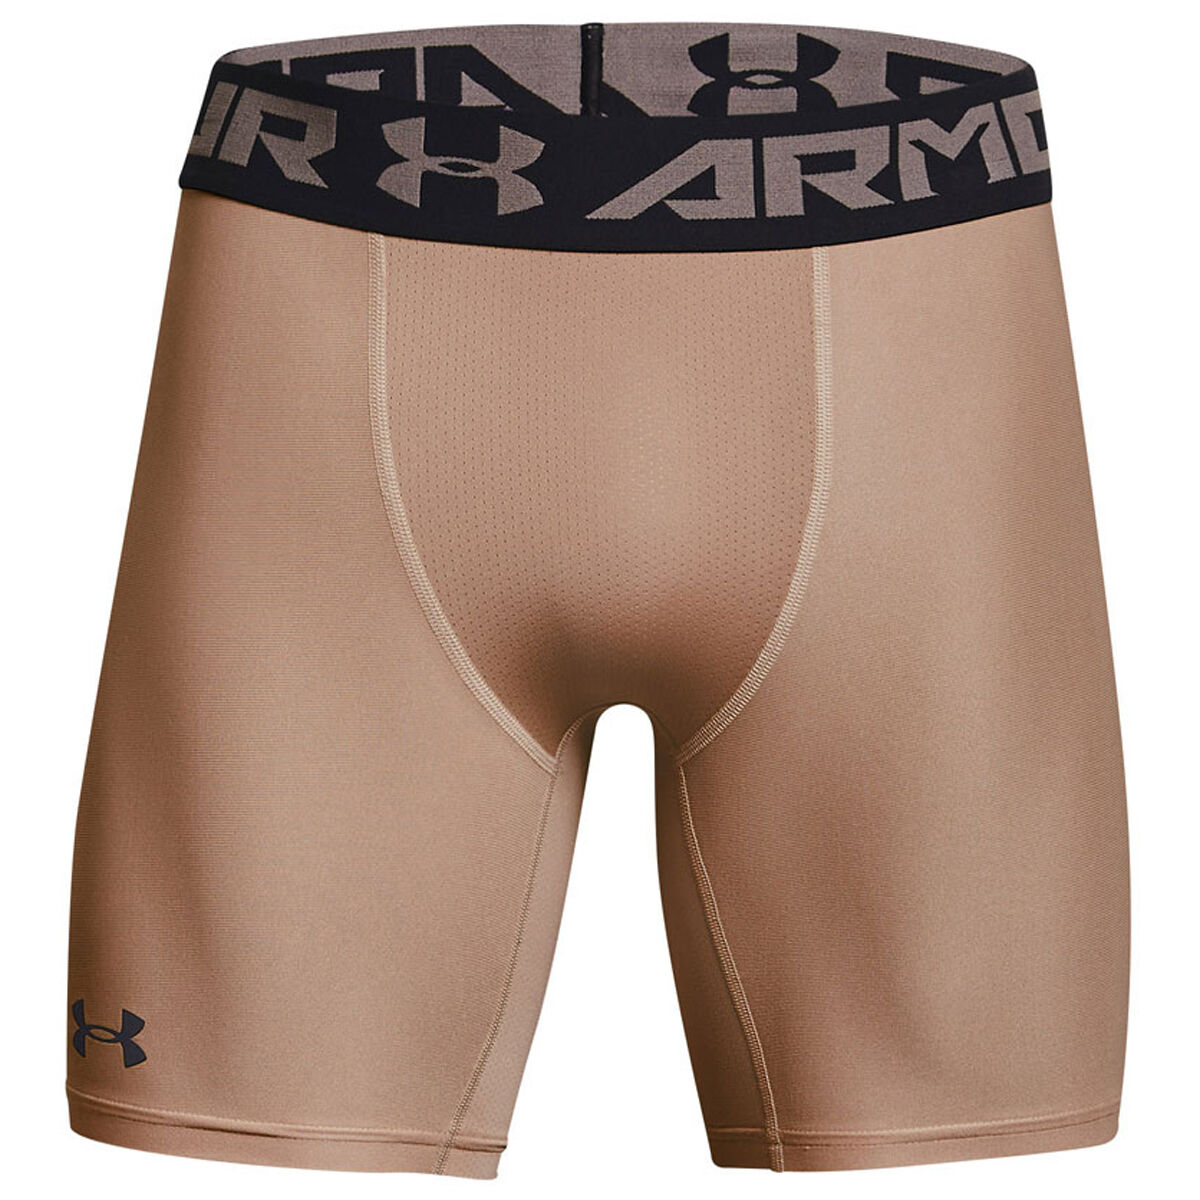 Under Armour Men's HeatGear Compression Shorts 